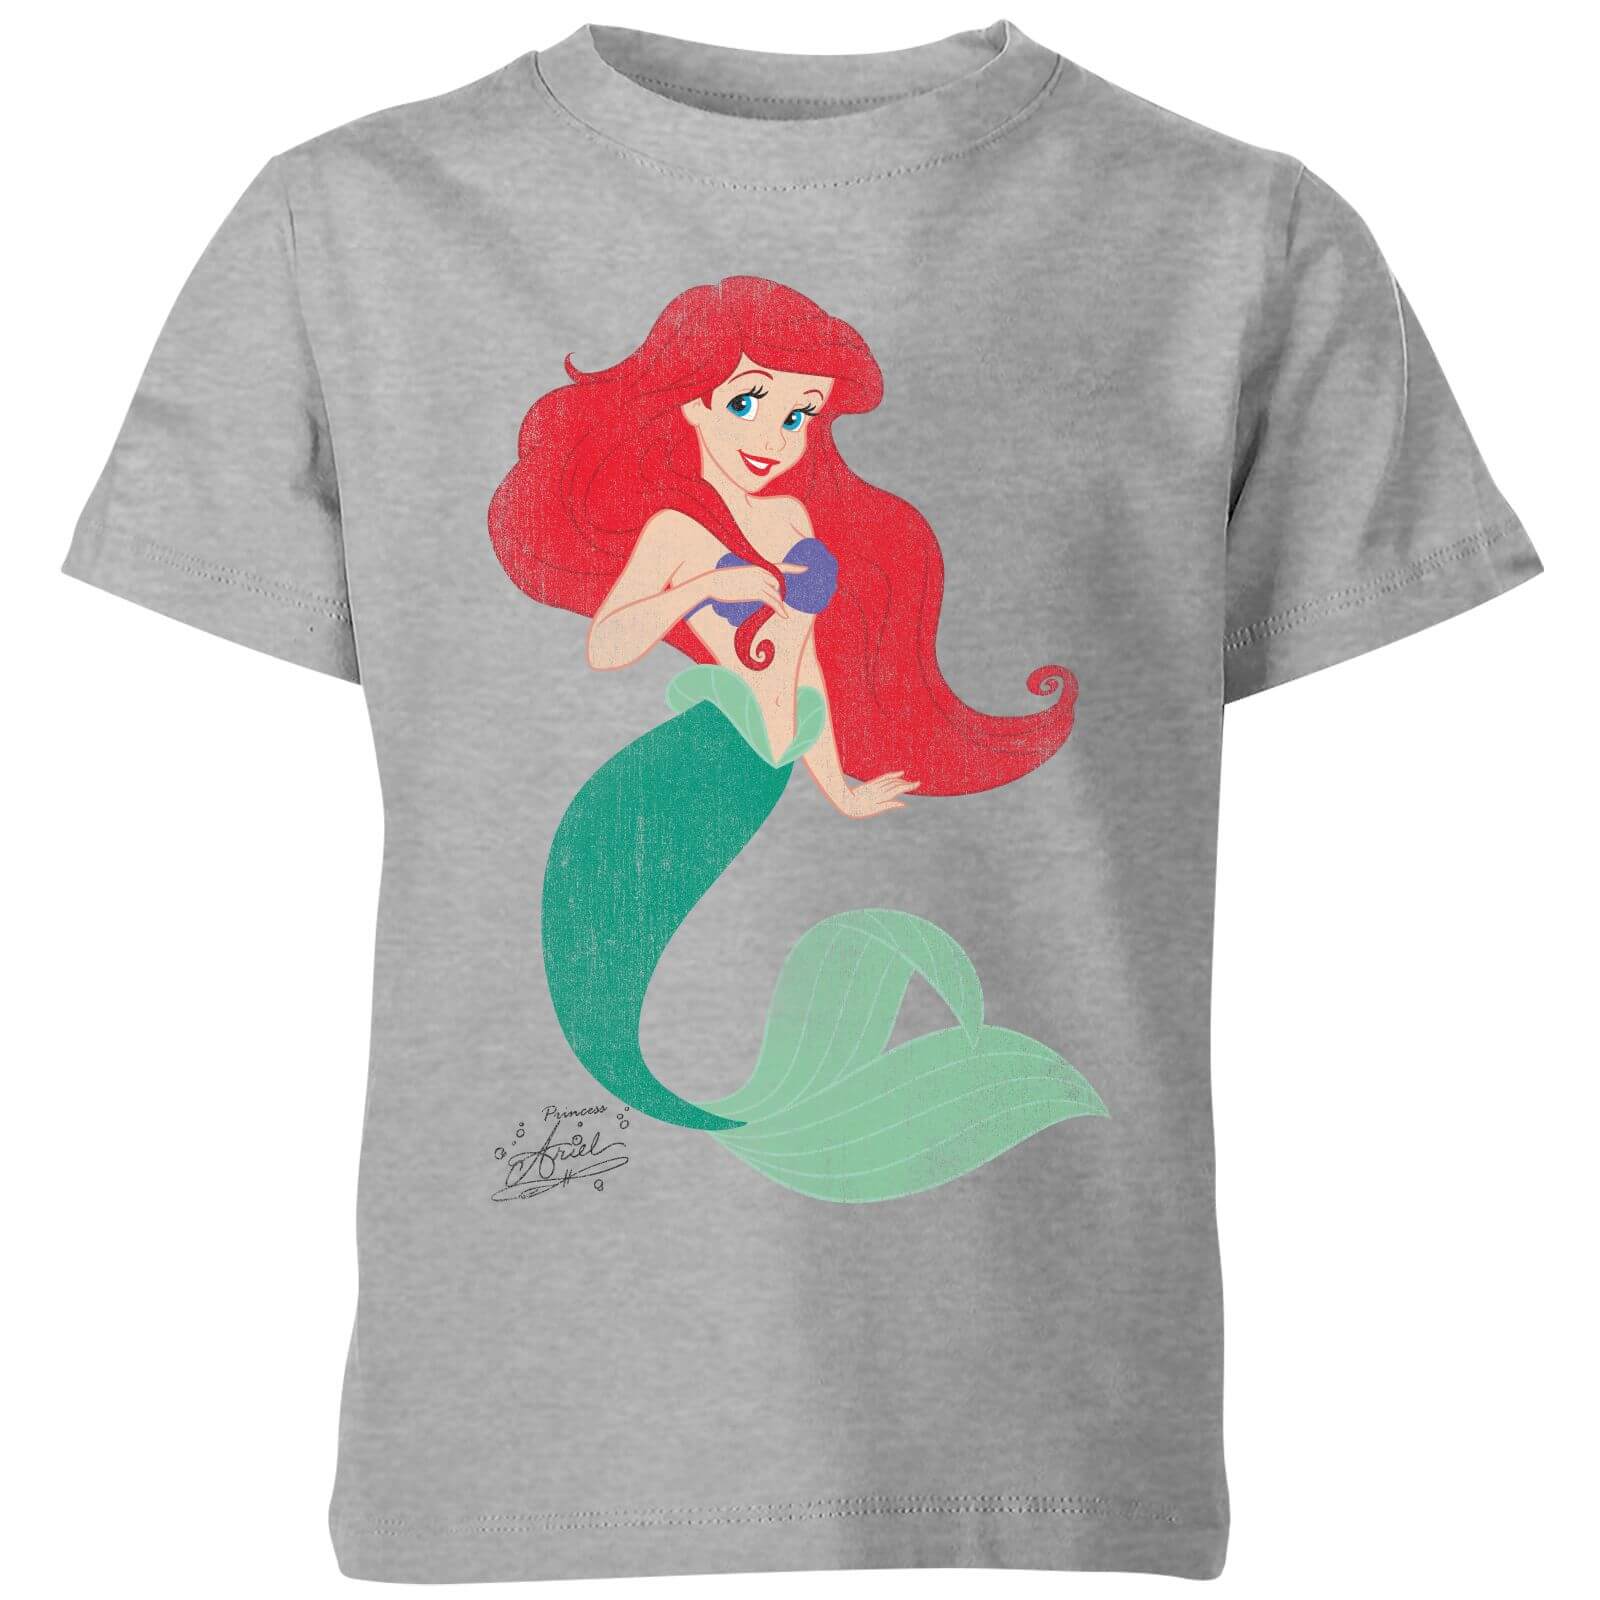 Disney The Little Mermaid Princess Ariel Classic Kids' T-Shirt - Grey - 7-8 Years